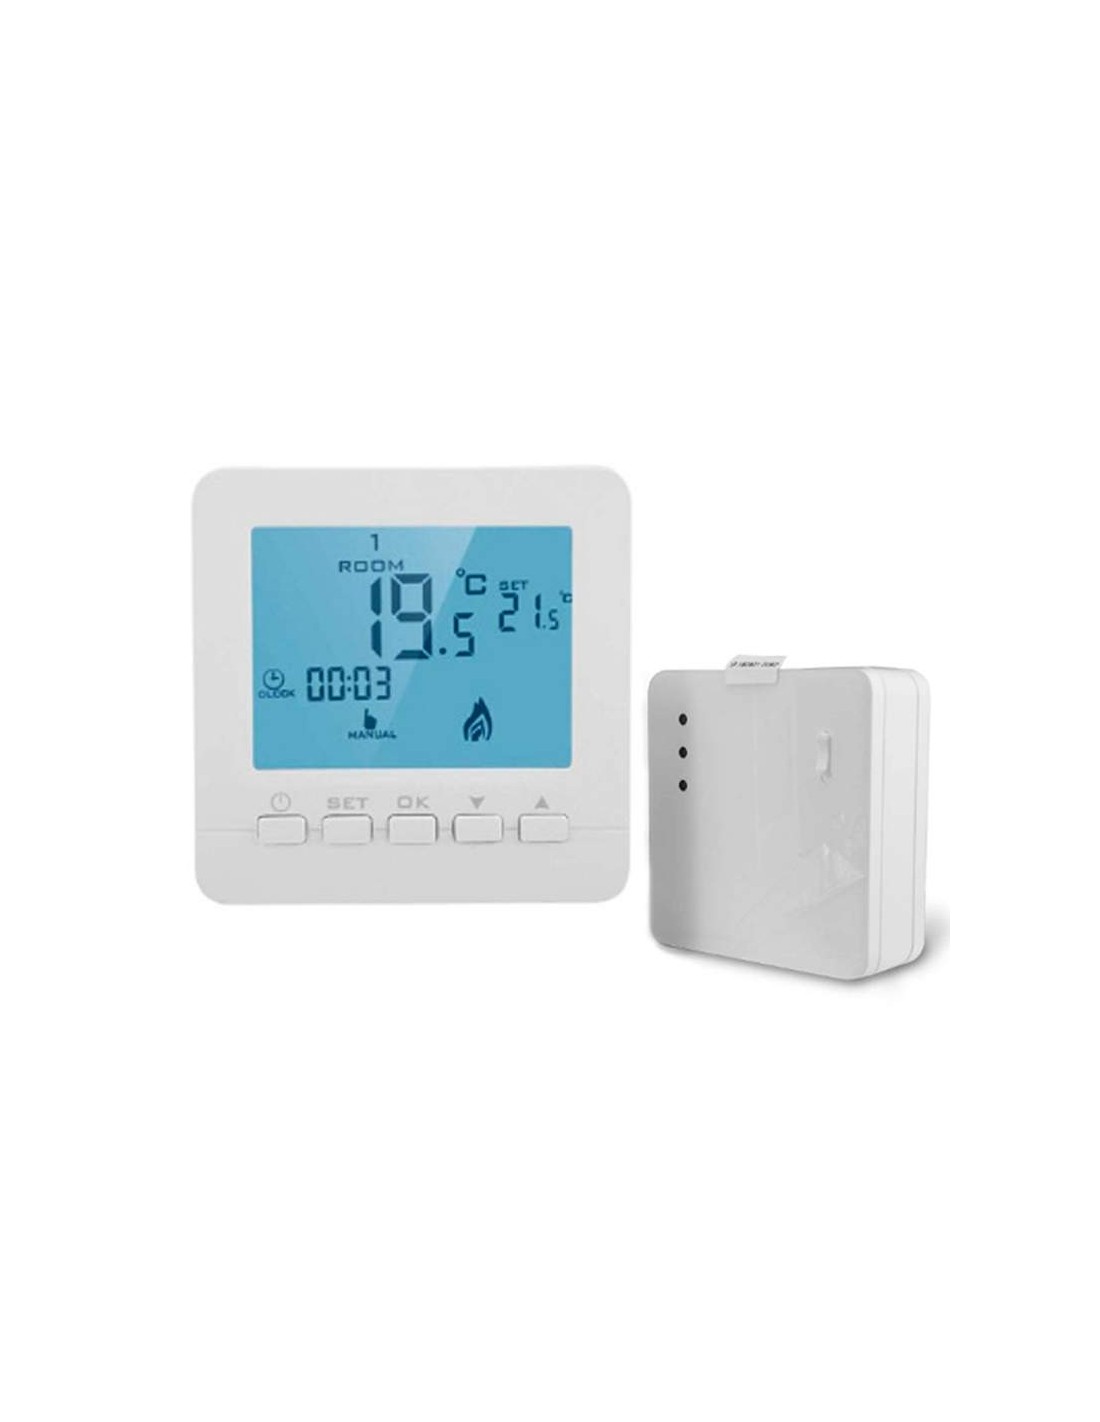 termostato calefaccion digital programable t4r inalambrico honeywell